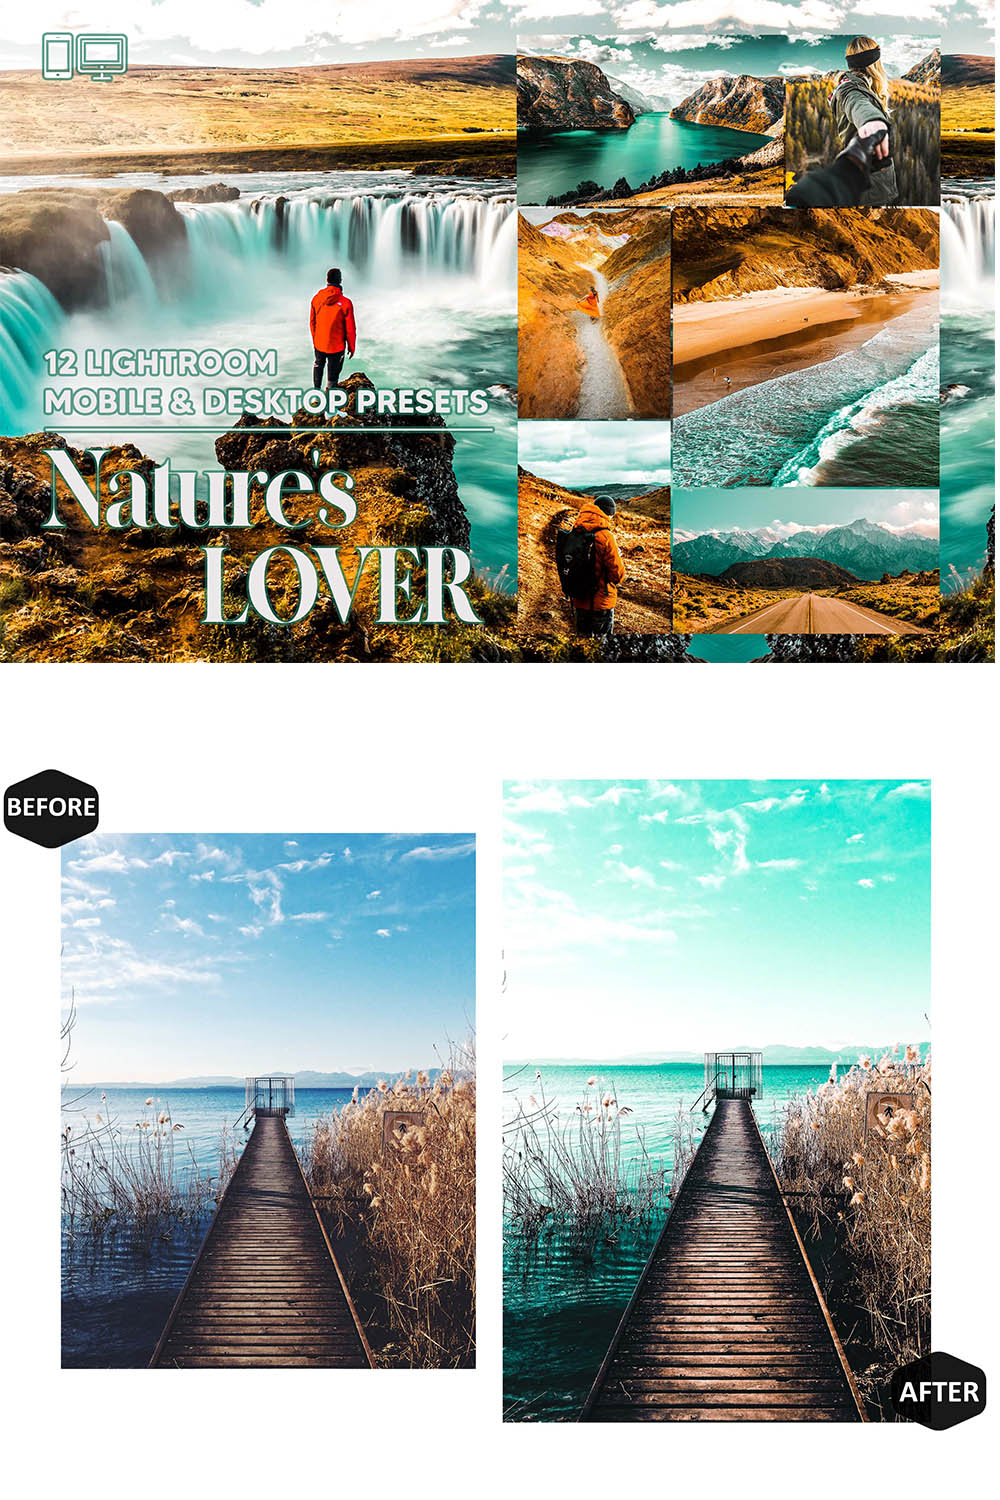 12 Nature's Lover Lightroom Presets, Landscape Mobile Preset, Scenery Desktop LR Lifestyle DNG Instagram Vibrant Filter Theme Portrait Season pinterest preview image.